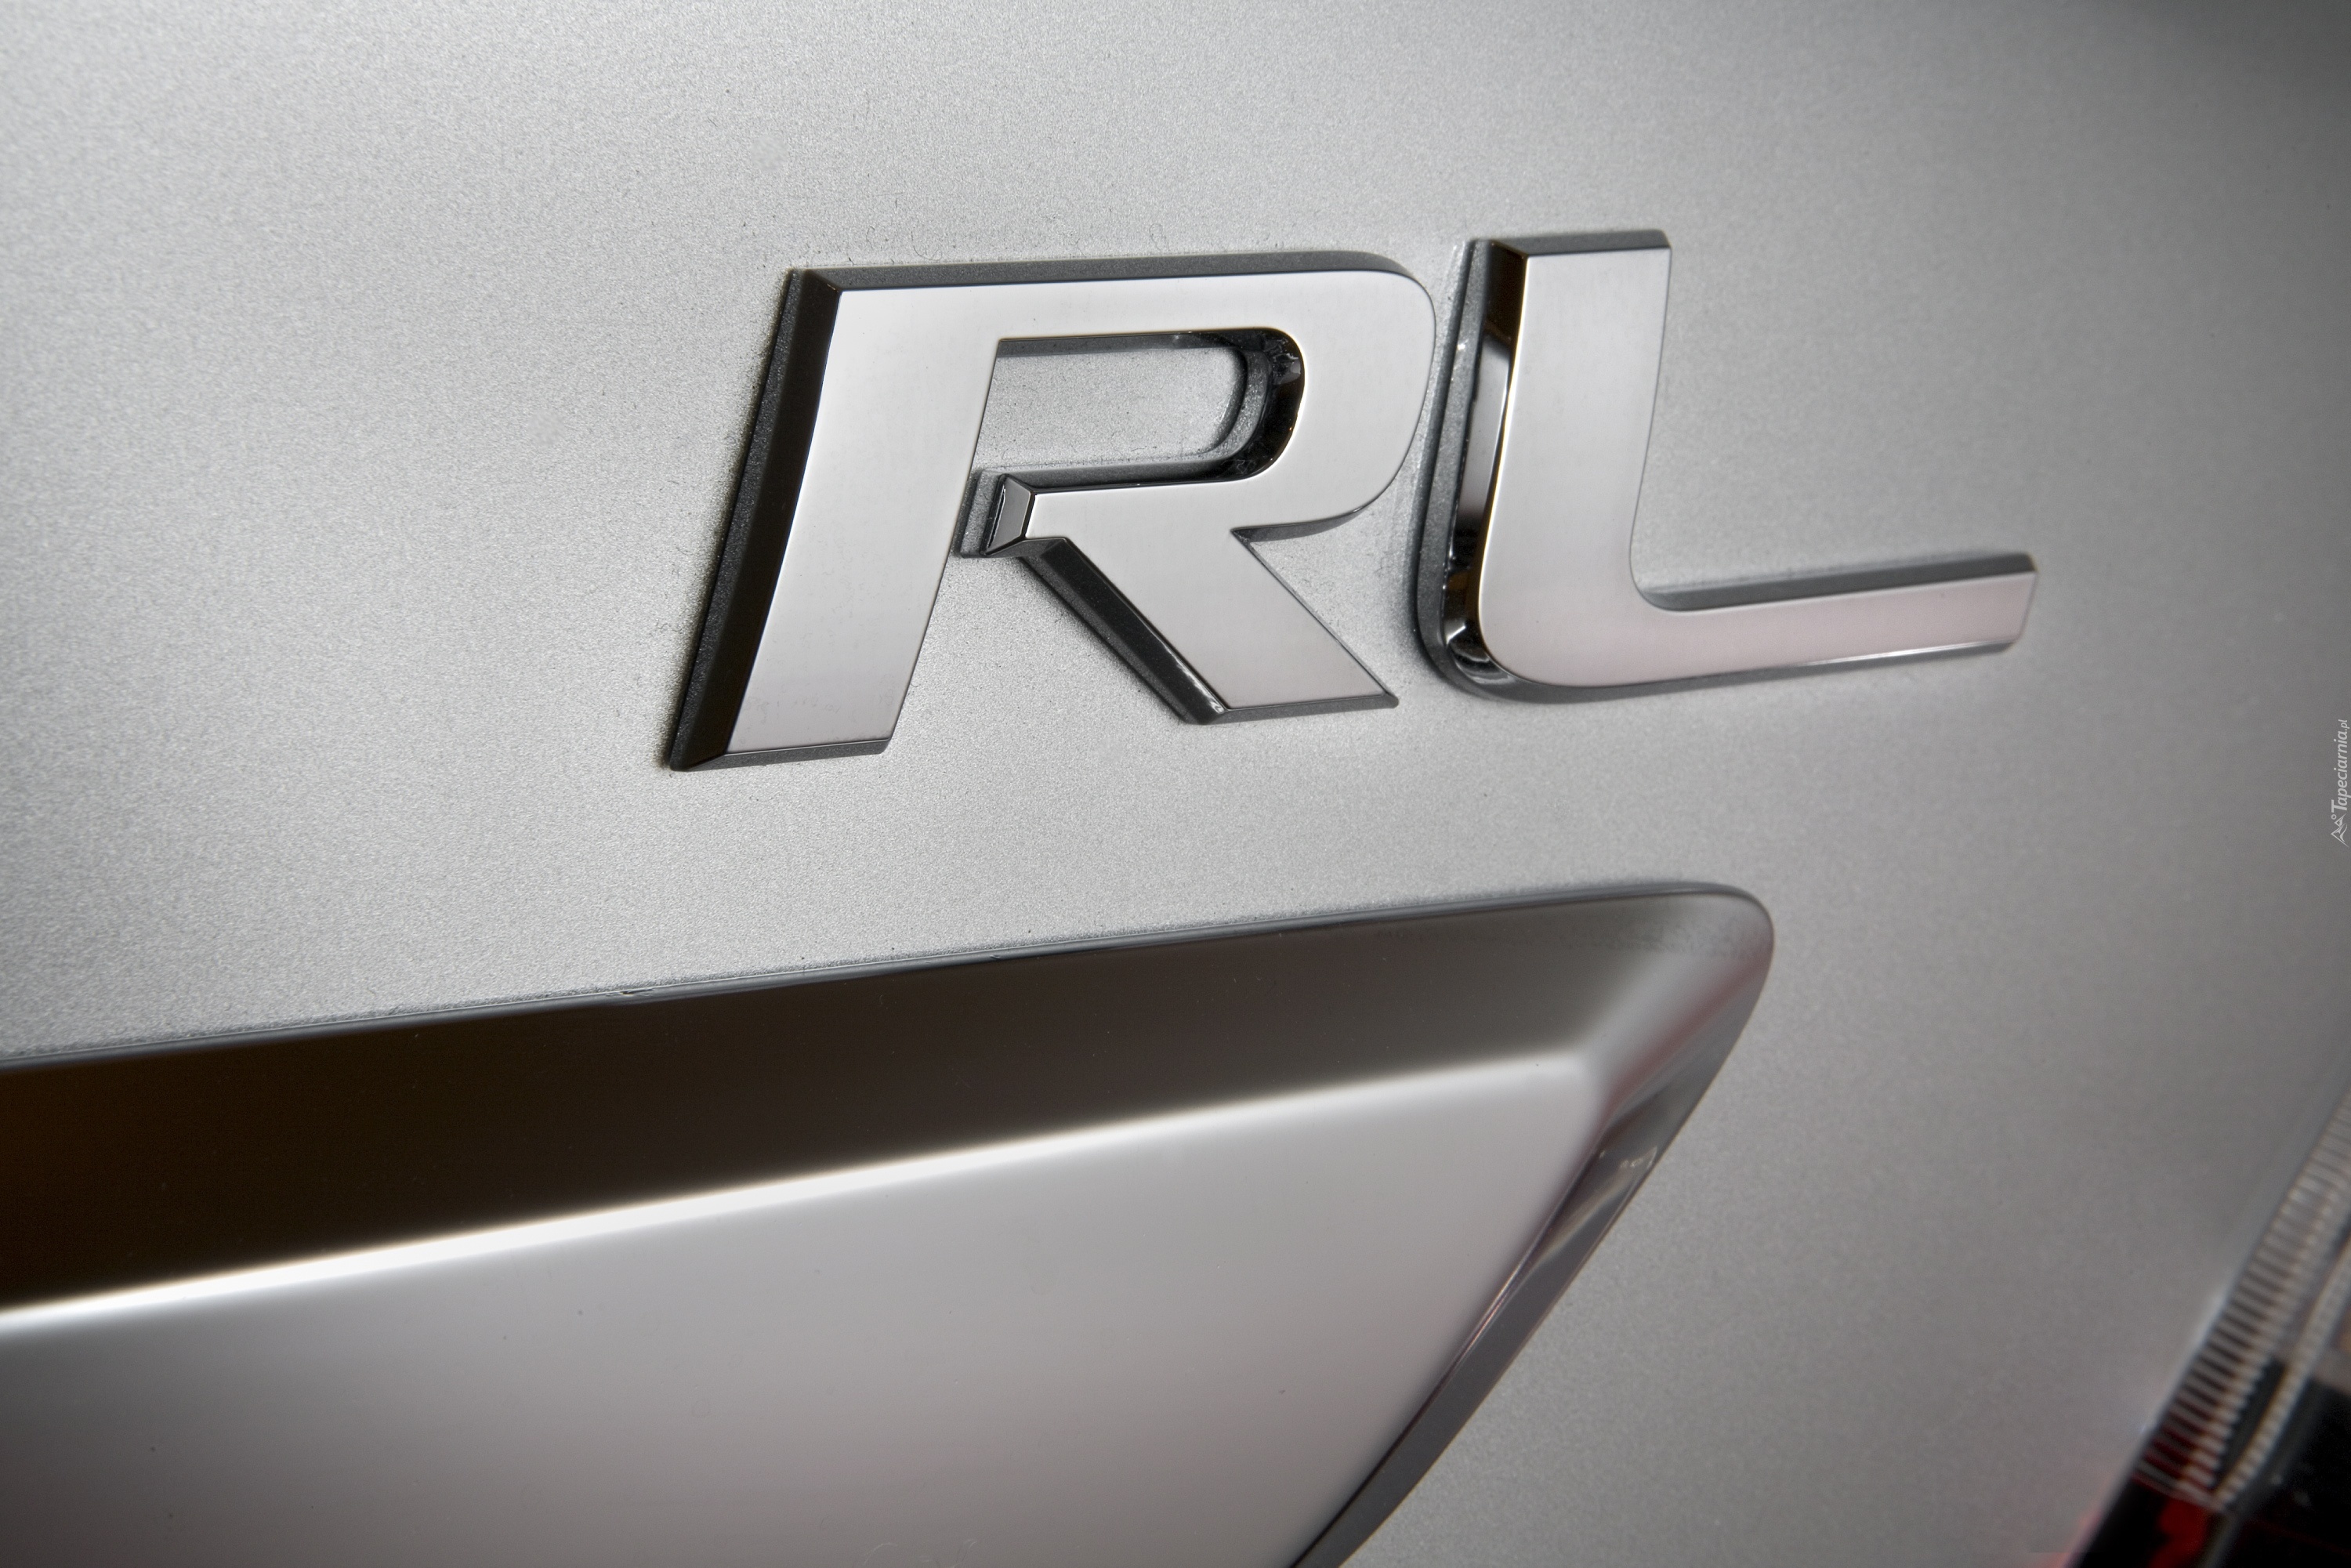 Acura RL, Emblemat, Logo, Znaczek